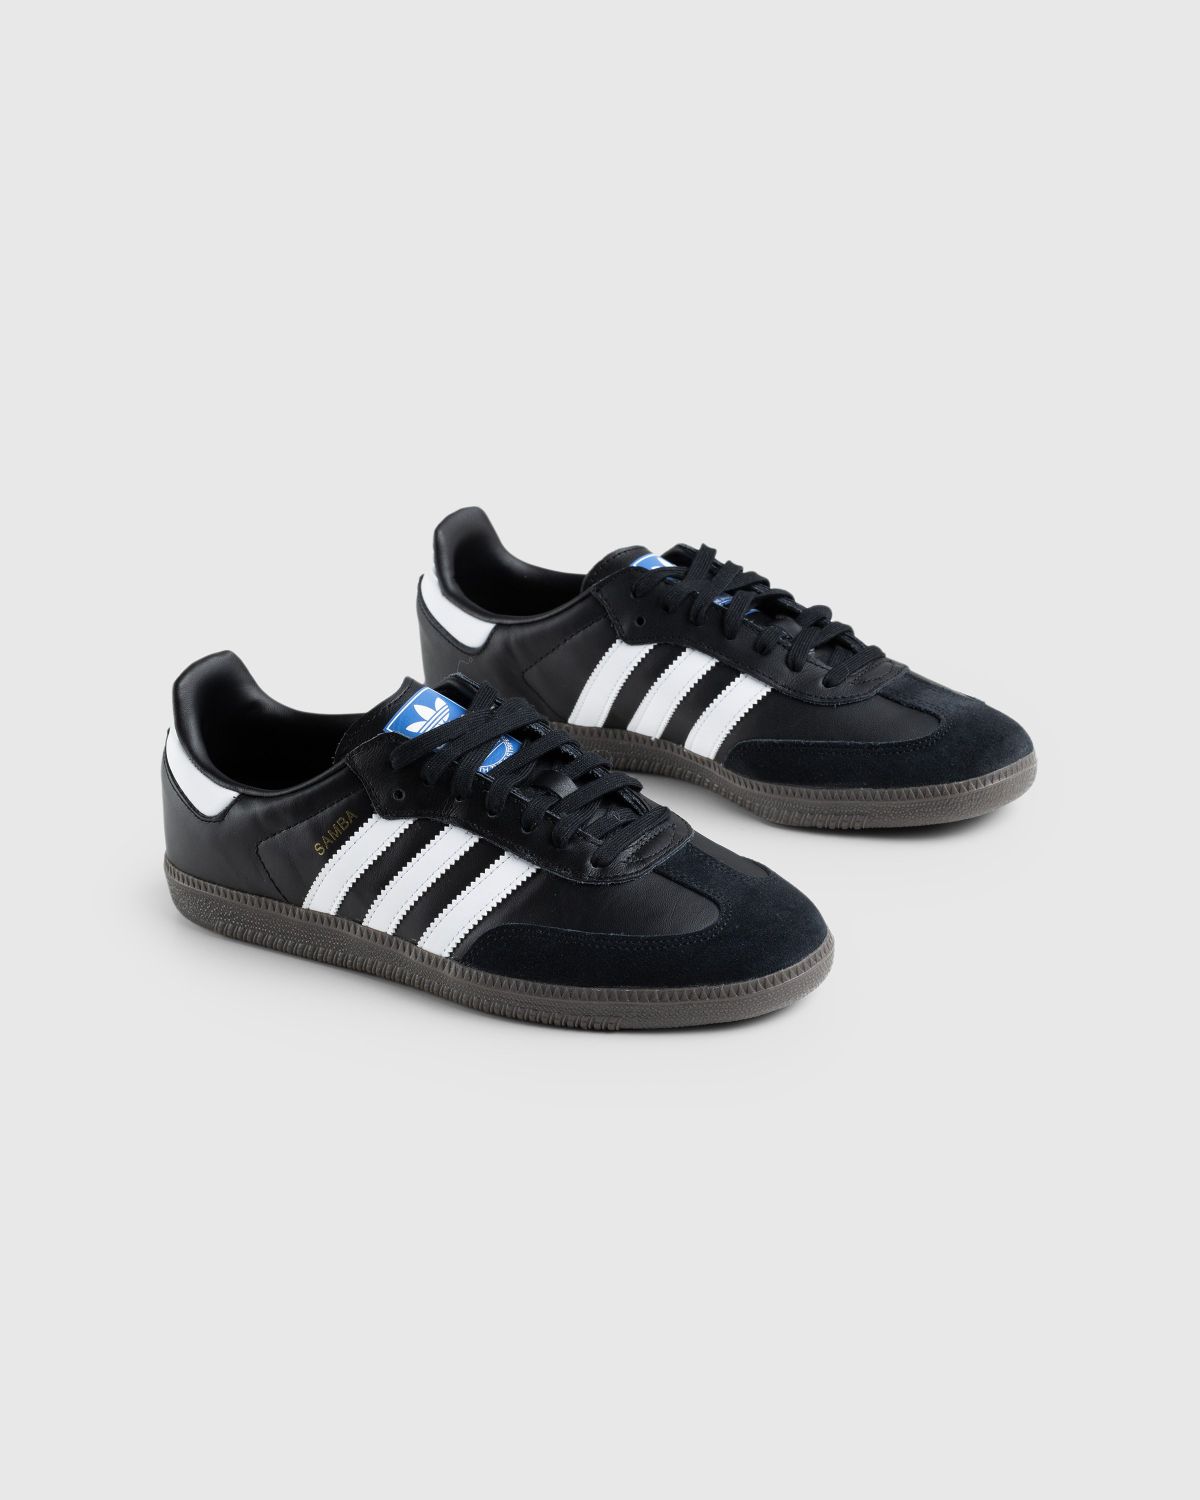 Adidas – Samba OG Black/White/Gum